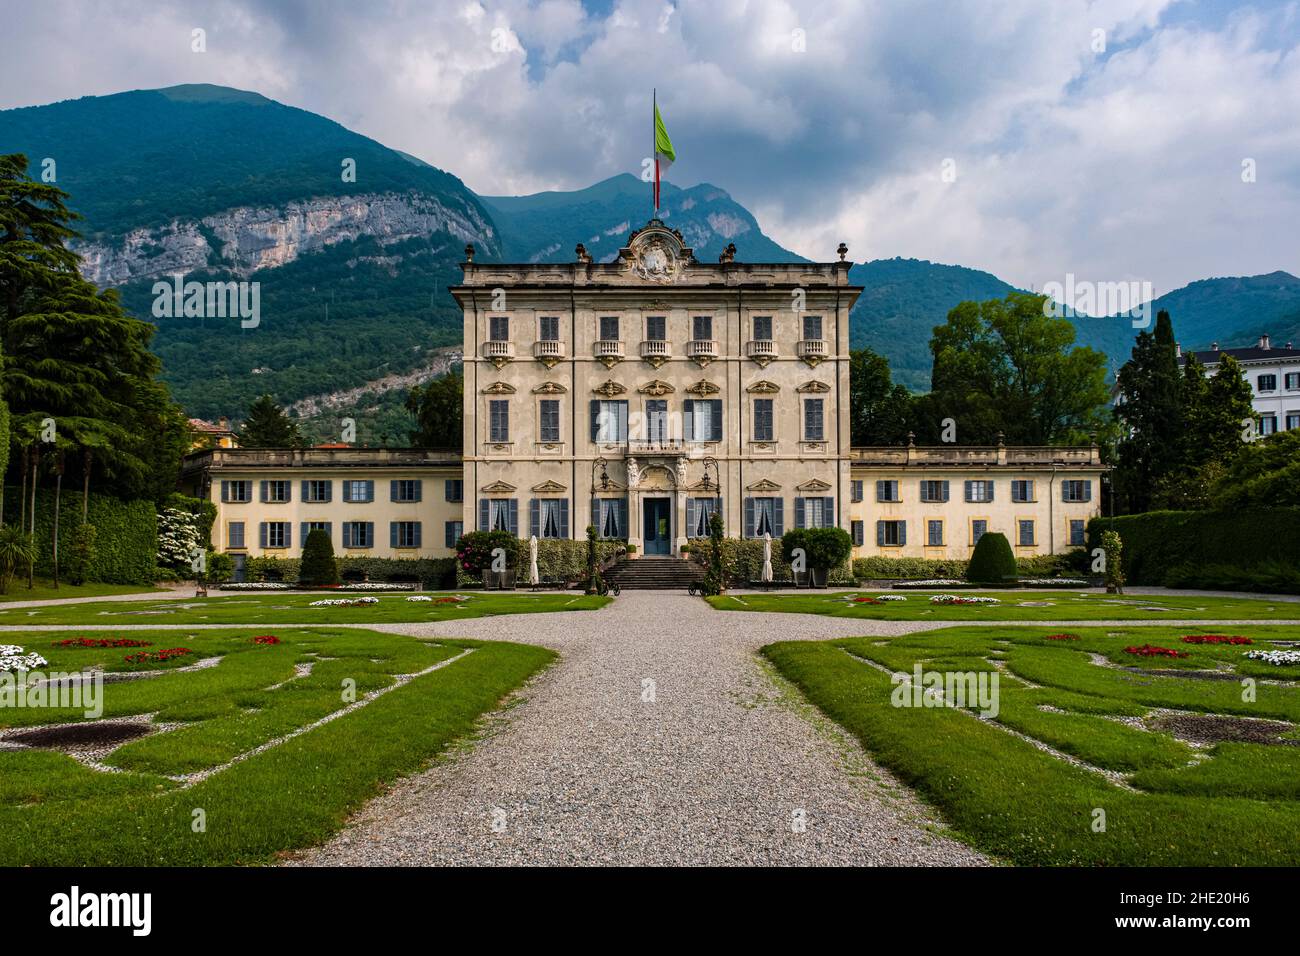 Villa Sola Cabiati, located at the lakeside of Lake Como, was built in 16th century. Stock Photo